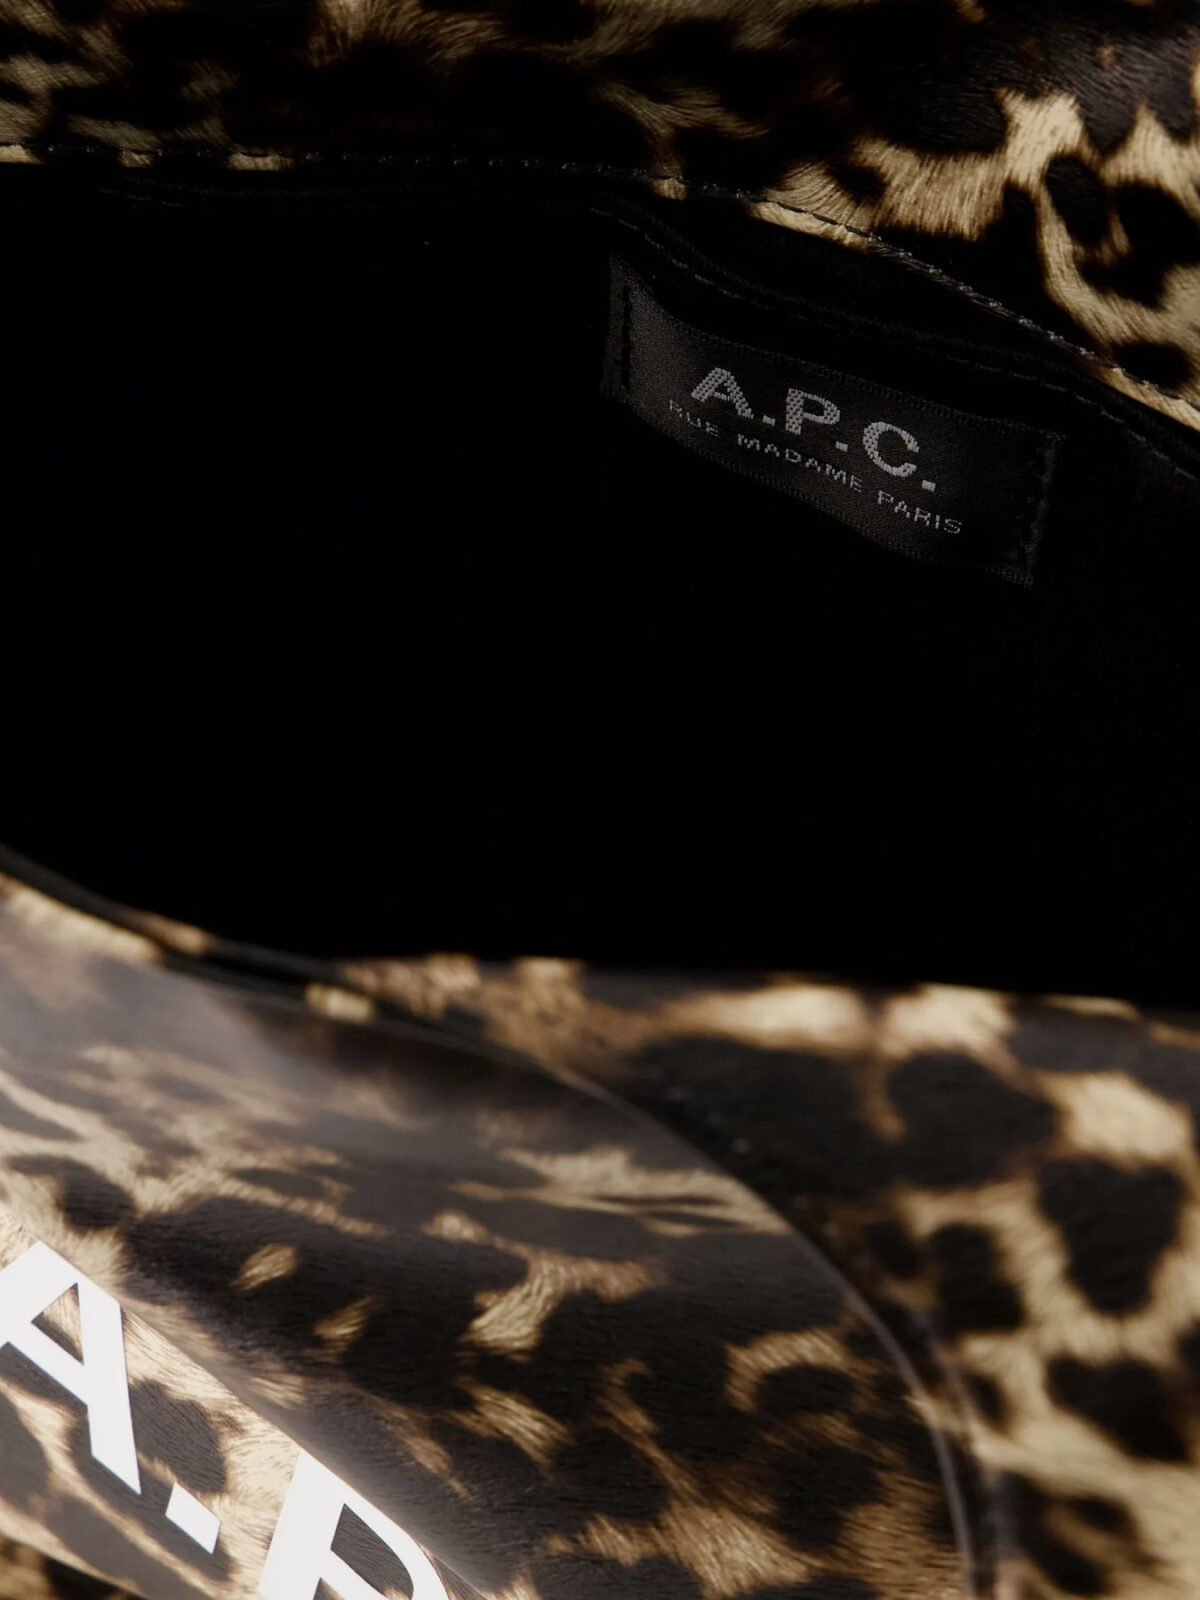 ninon-leopard-print-tote-bag-logo-vegan-leather-apc-paris-matchboxathens